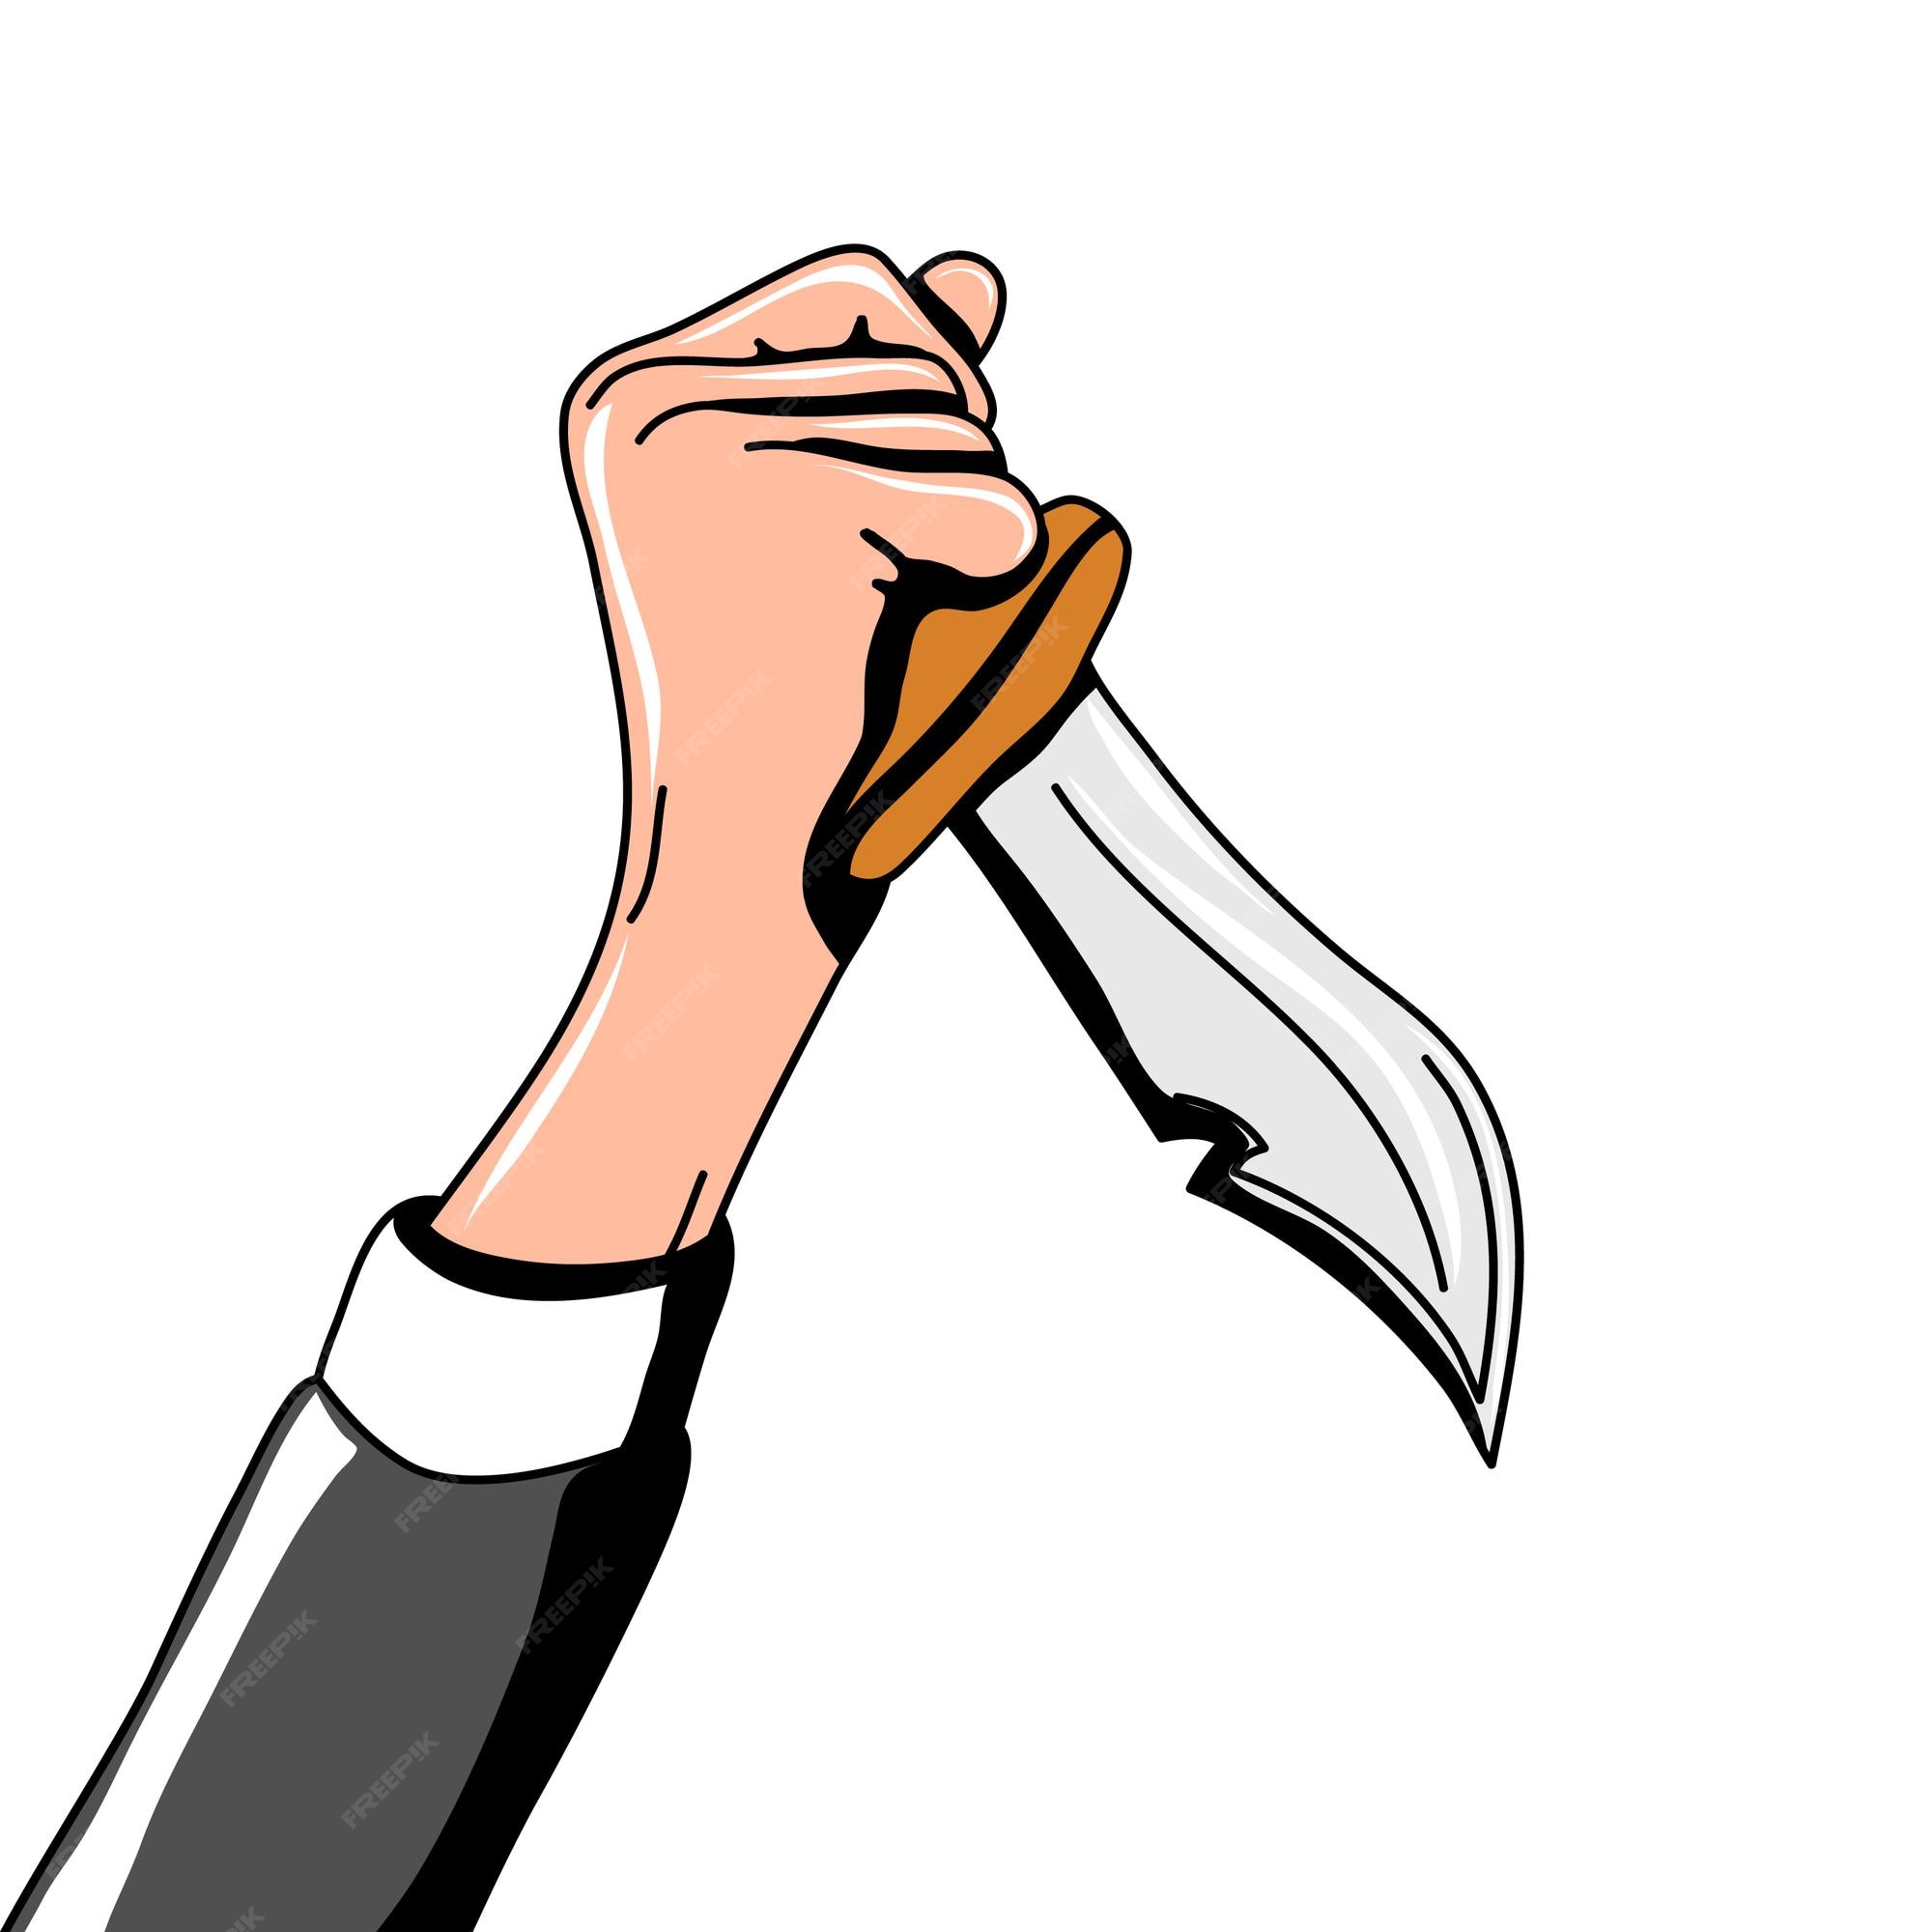 Premium Vector | Vector hand draw holding knife, illustration for murder or  criminal, isolated on white